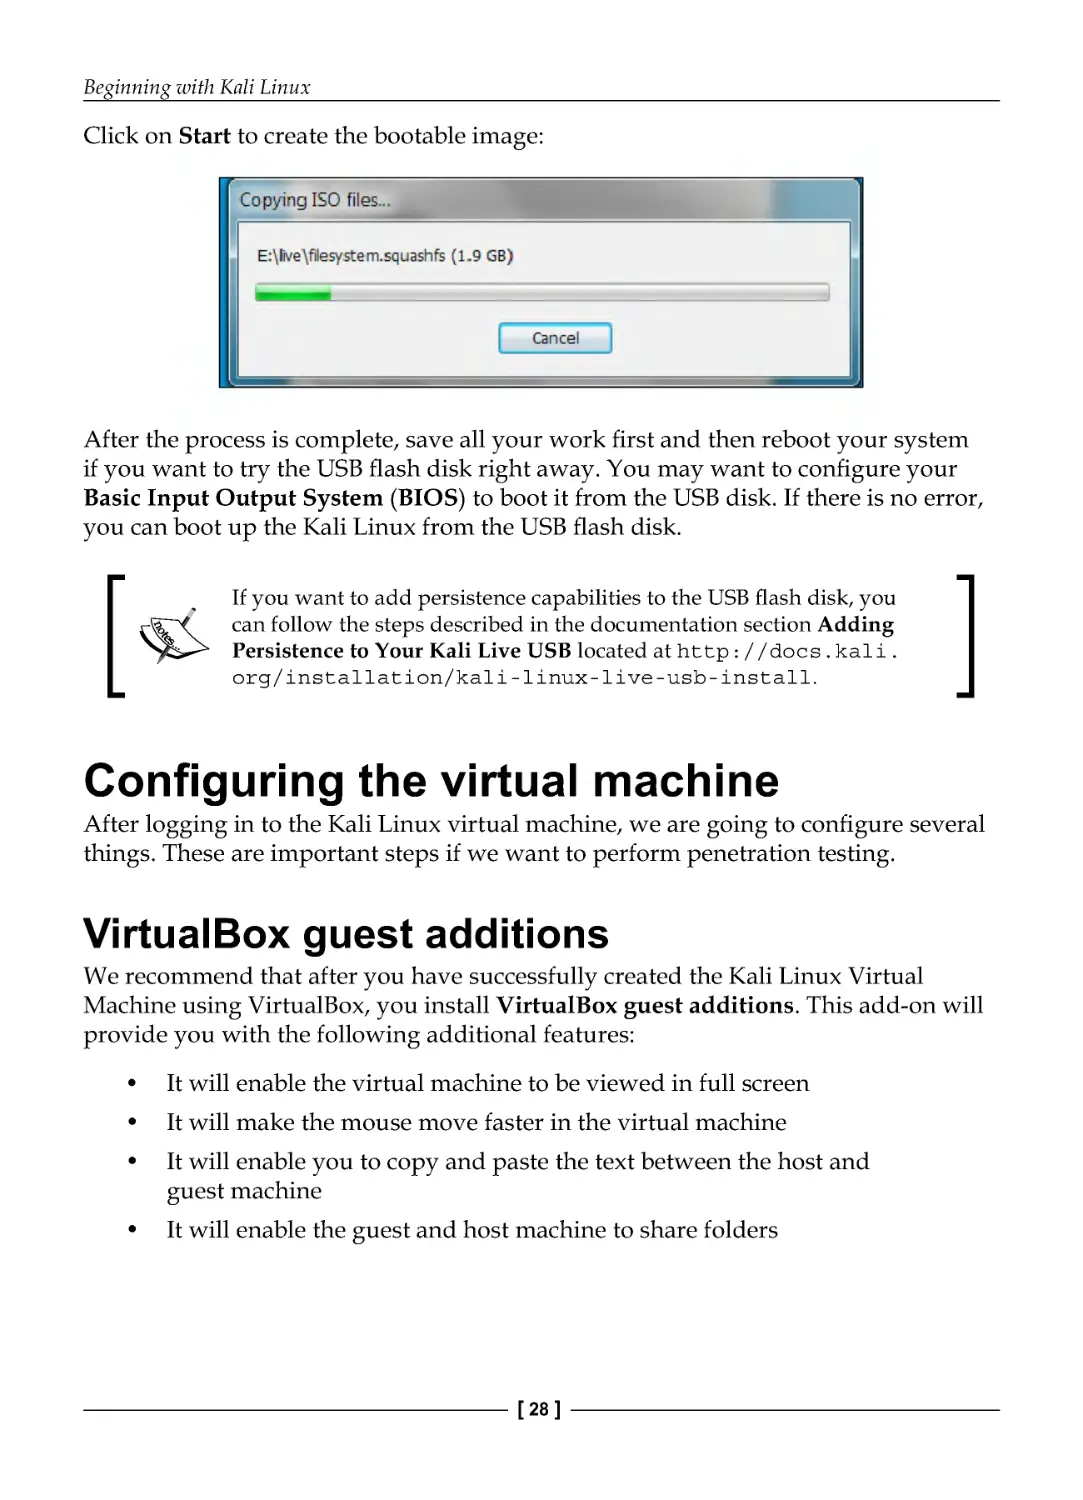 Configuring the virtual machine